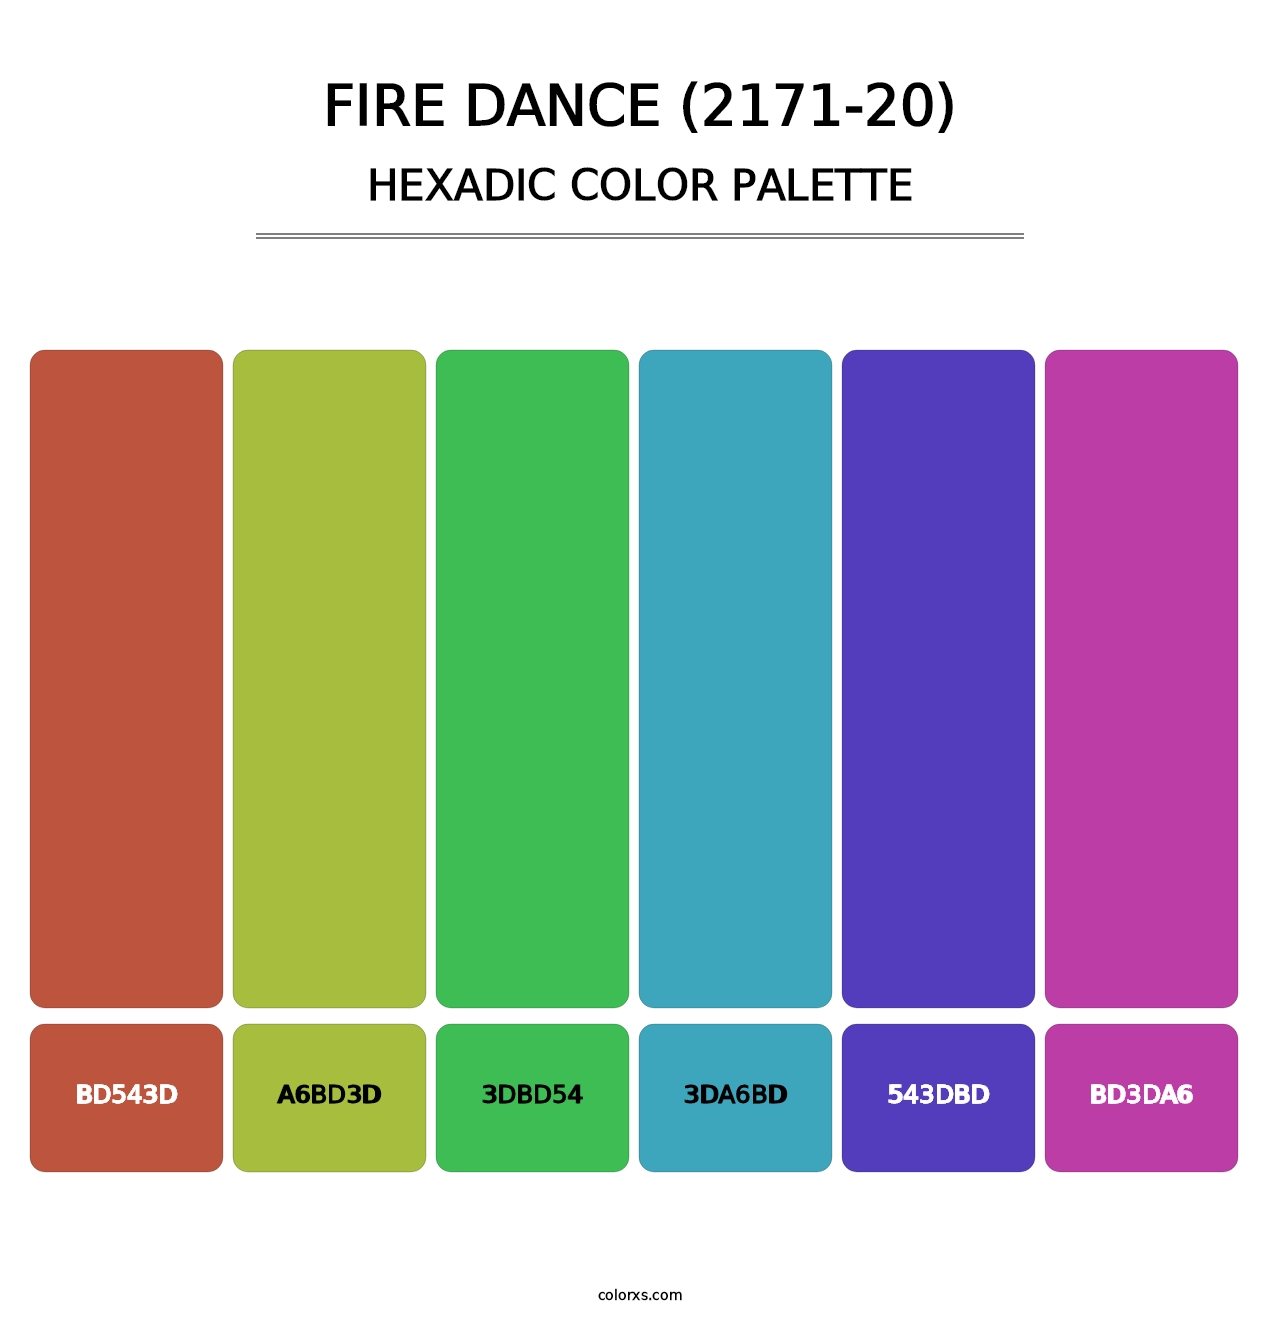 Fire Dance (2171-20) - Hexadic Color Palette